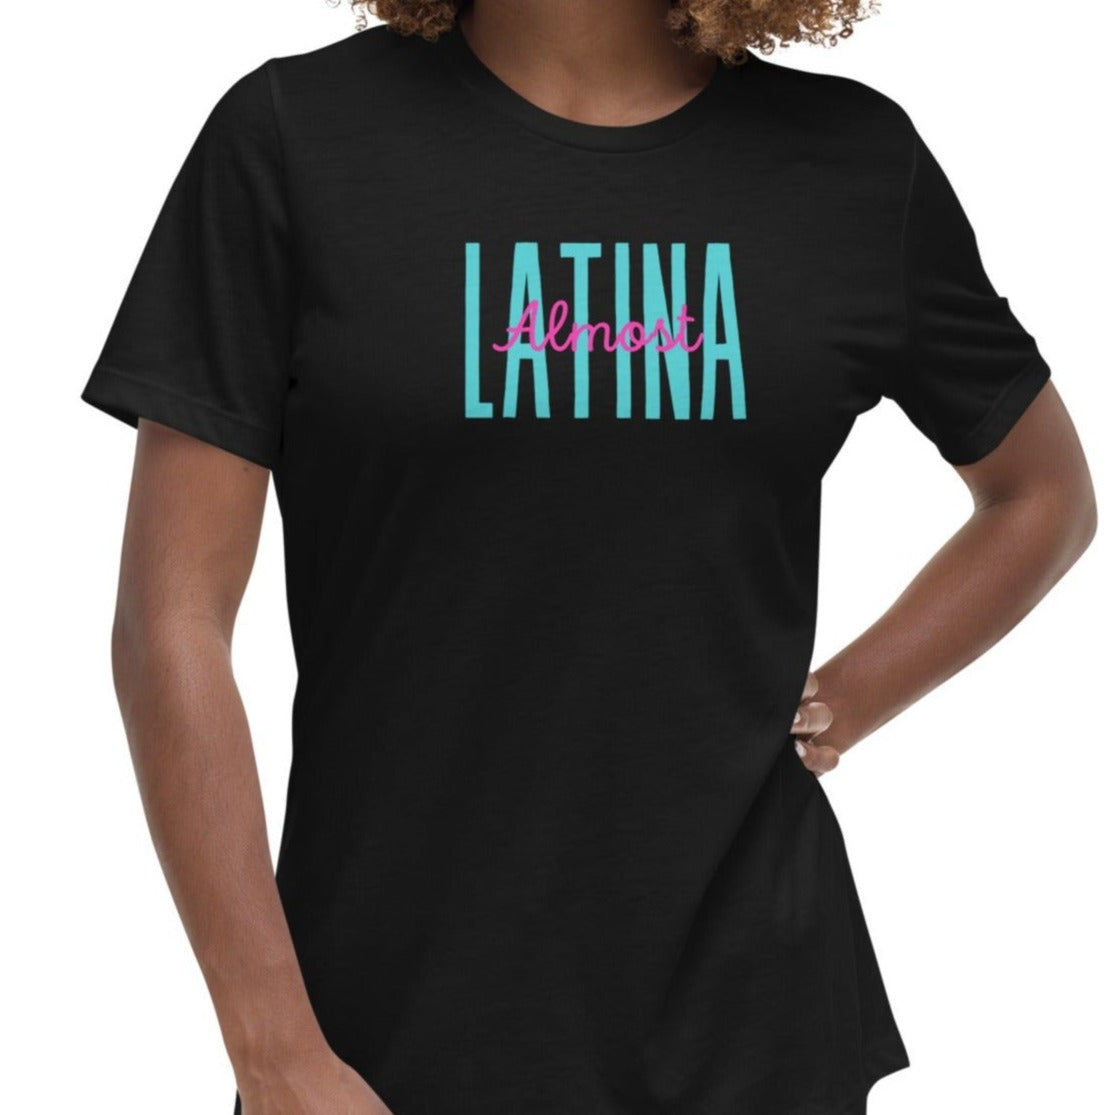 Almost Latina (Women)